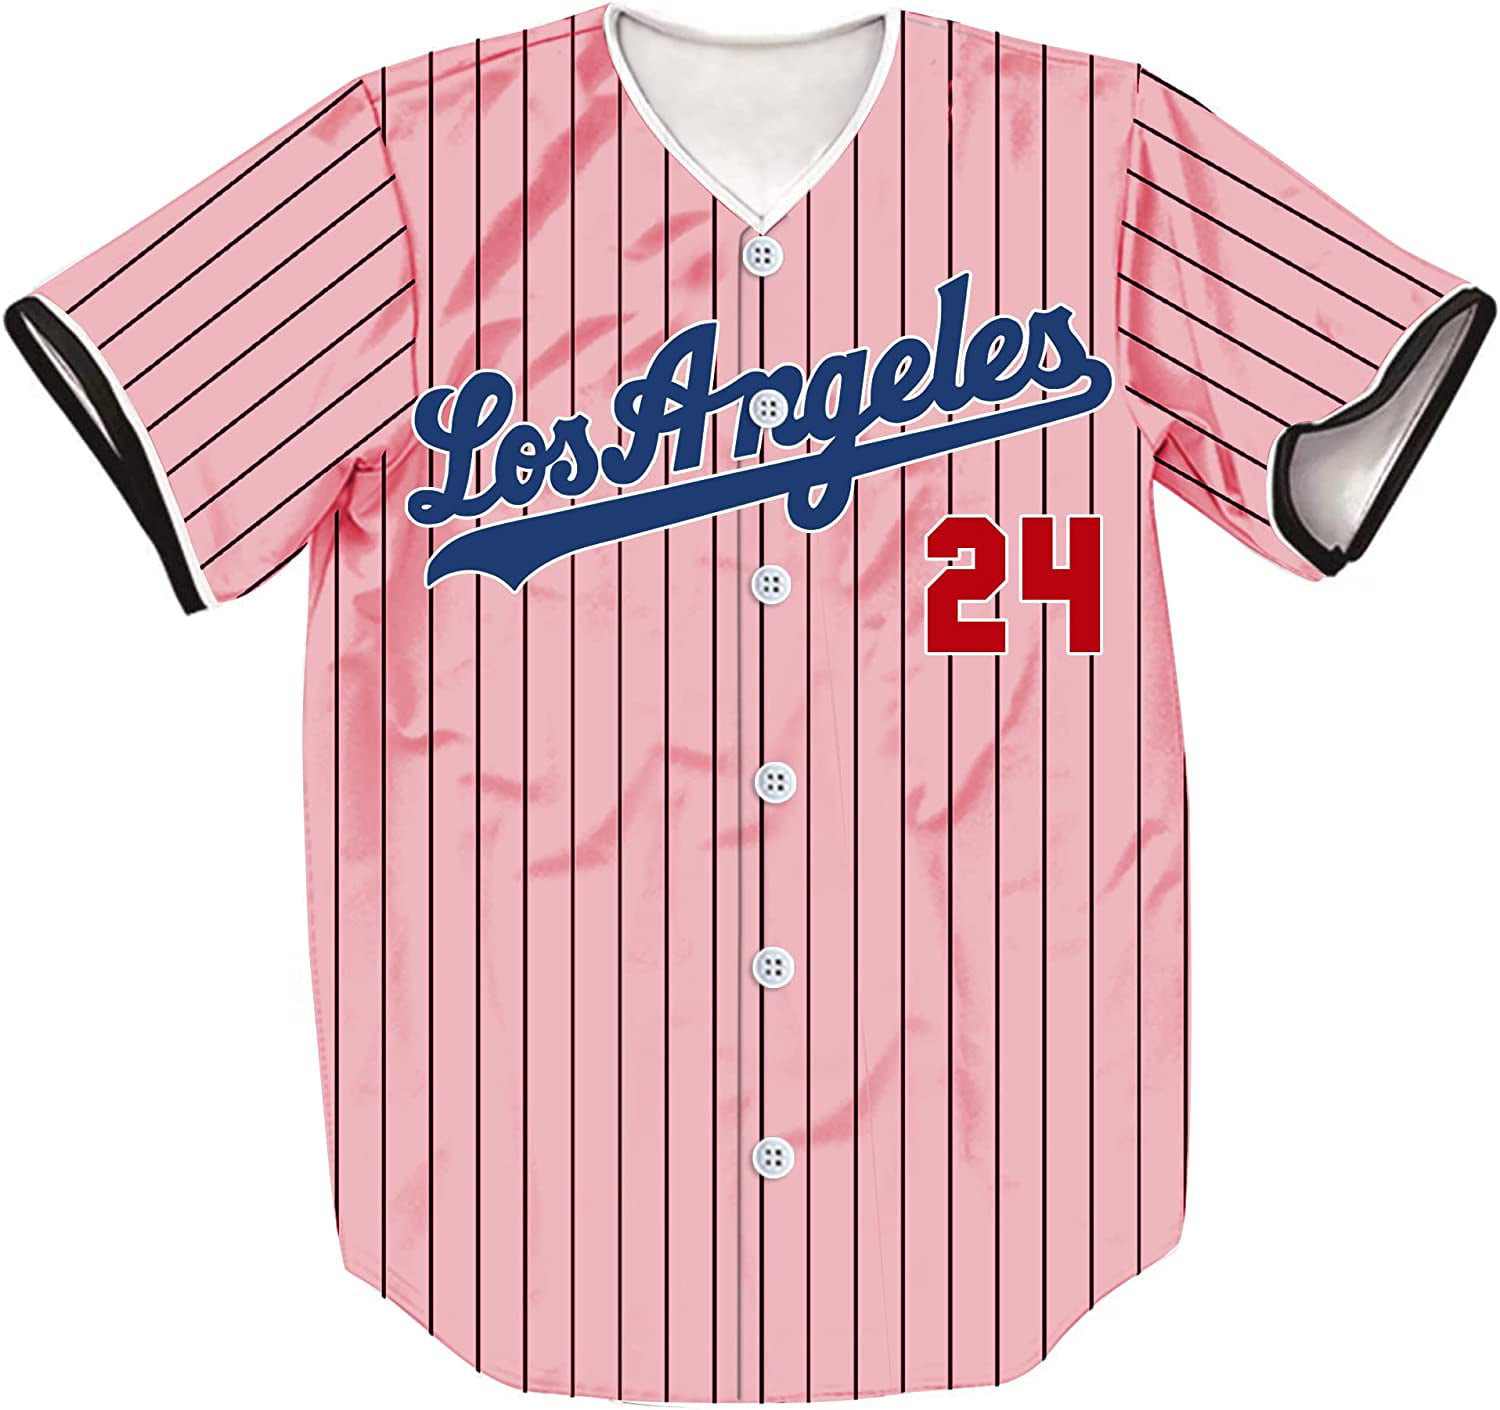 TIFIYA Los Angeles 99/23/24 Stripes Baseball Jersey La Baseball Team Shirts for Men/Women/Young